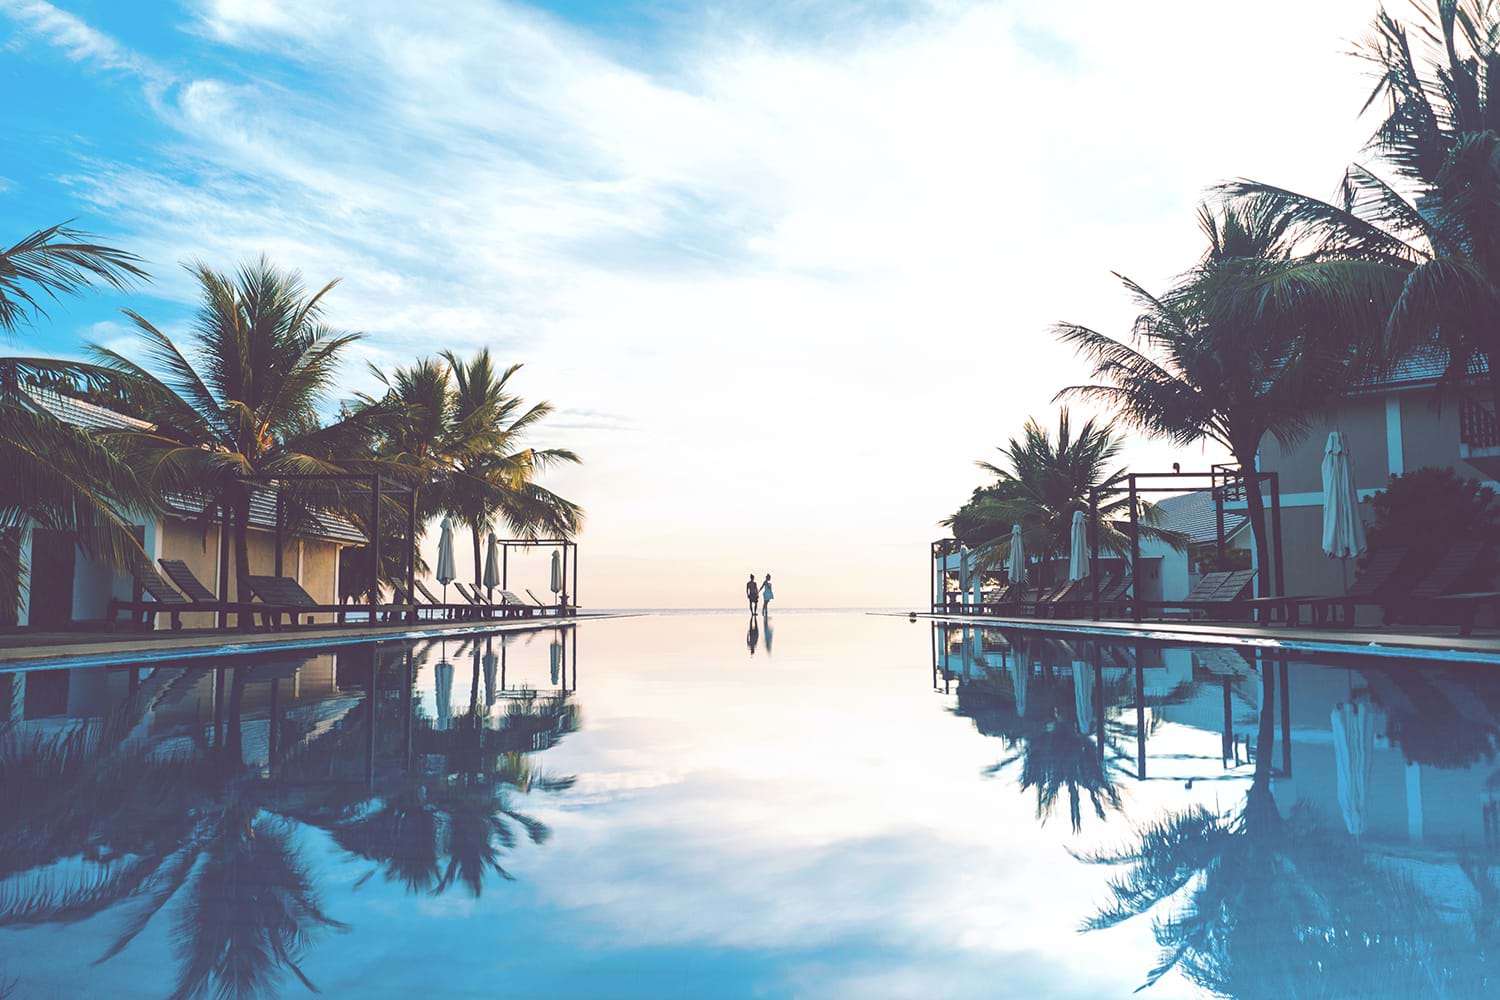 Calm resort pool reflecting the sky